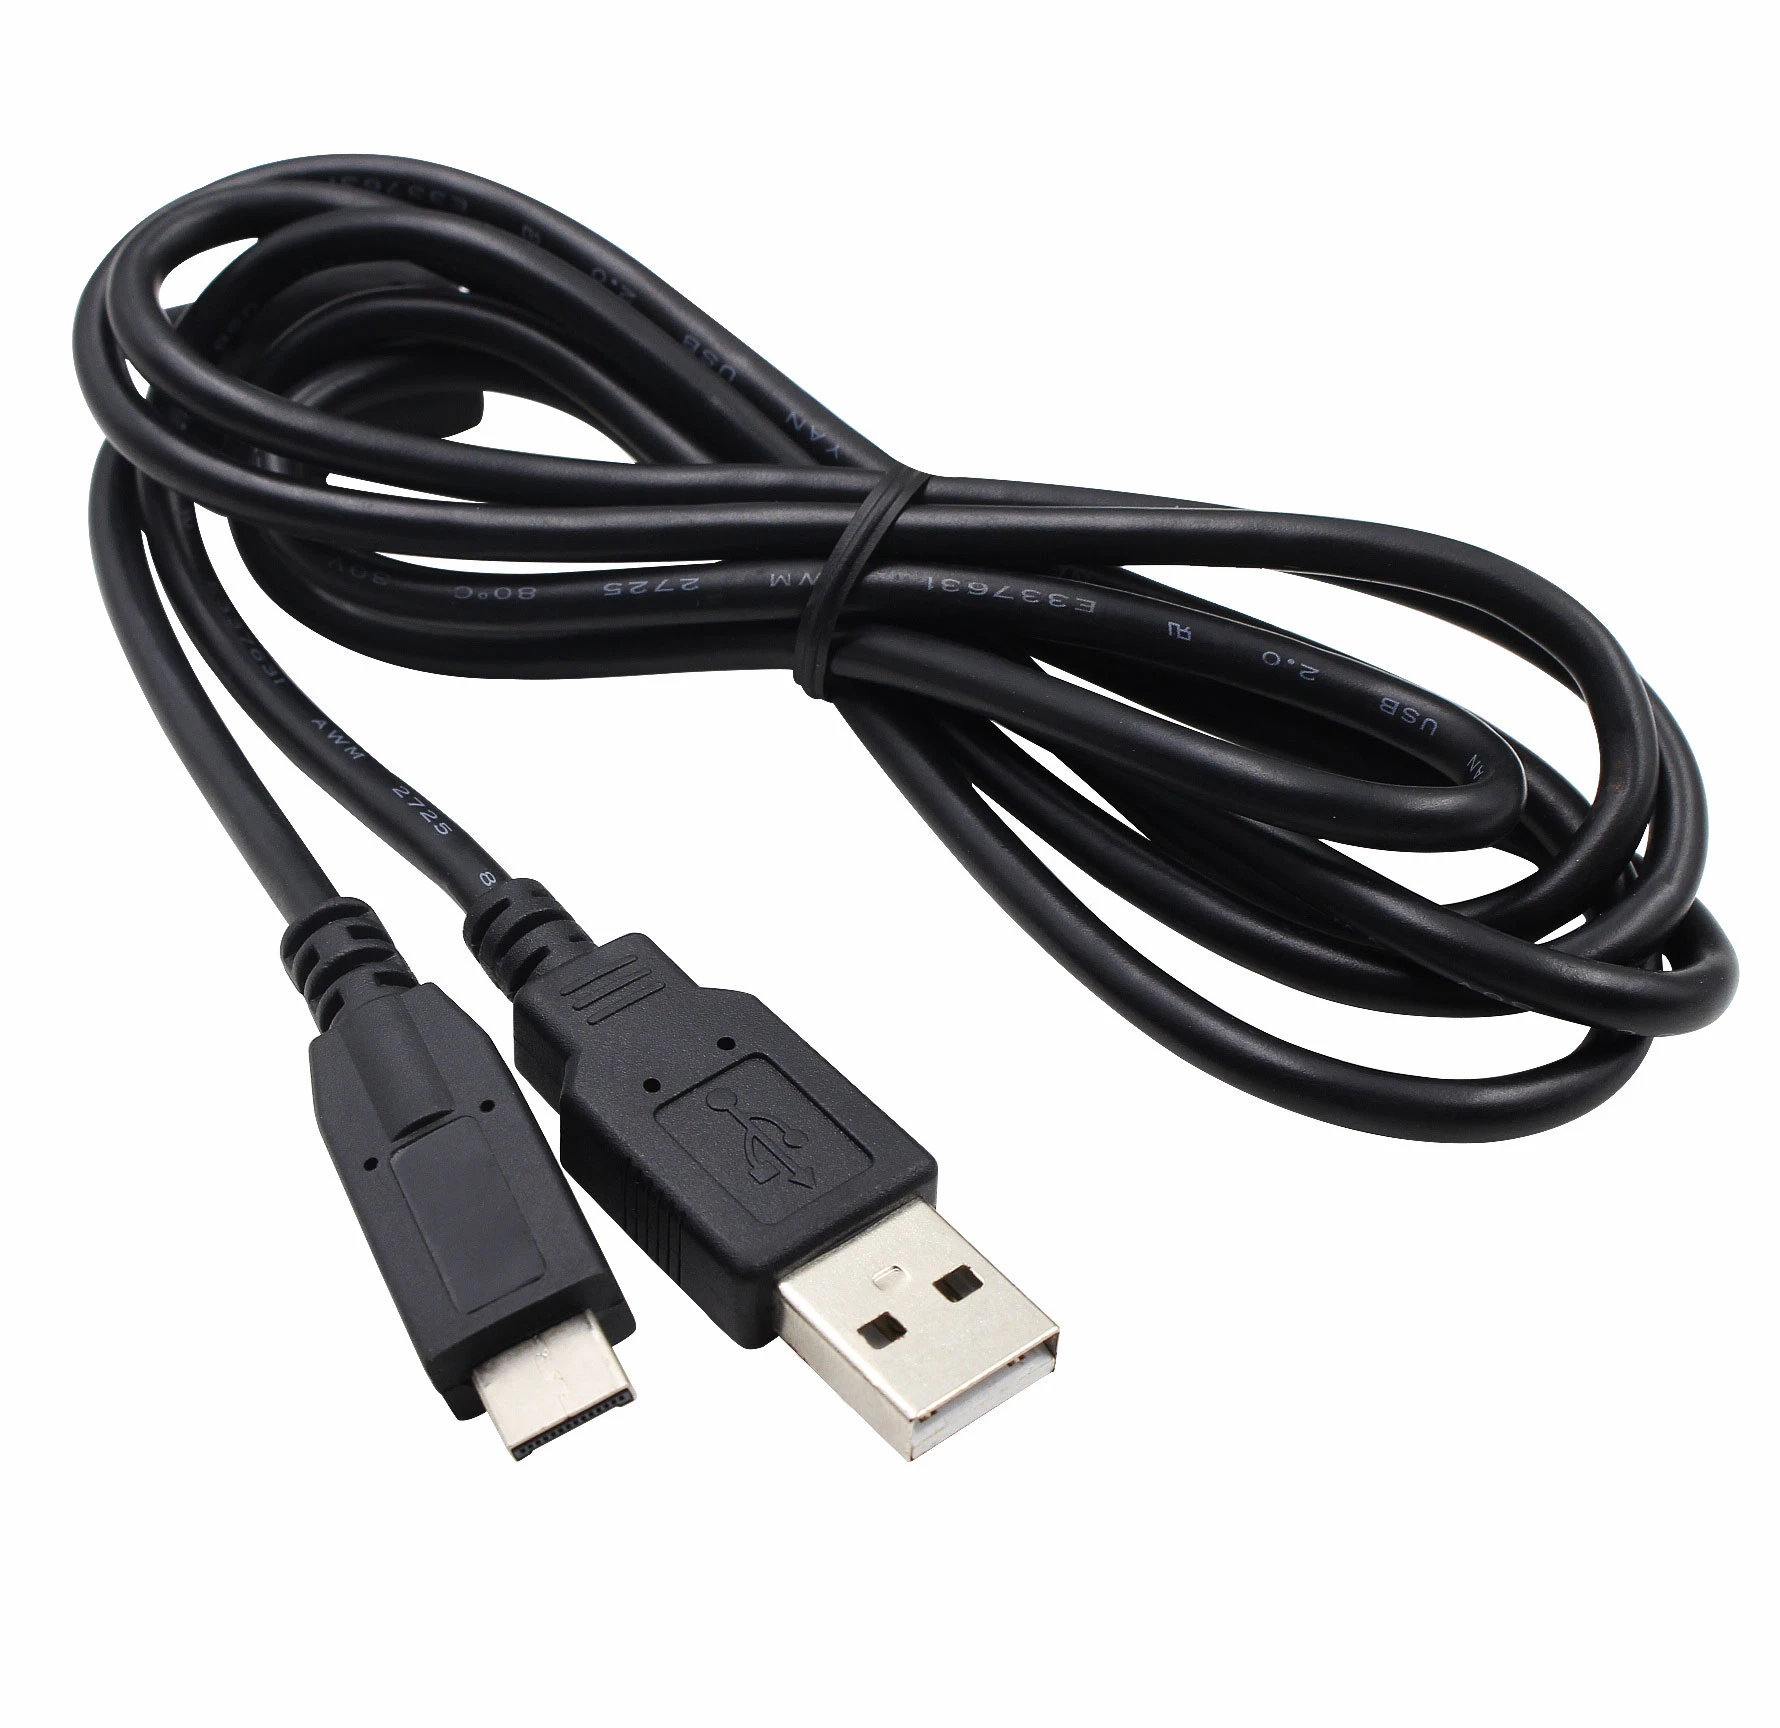 USB PC Data SYNC Cable Cord for Panasonic Lumix DMC-ZS7 DMC-FZ100 DMC-GF1 Camera 